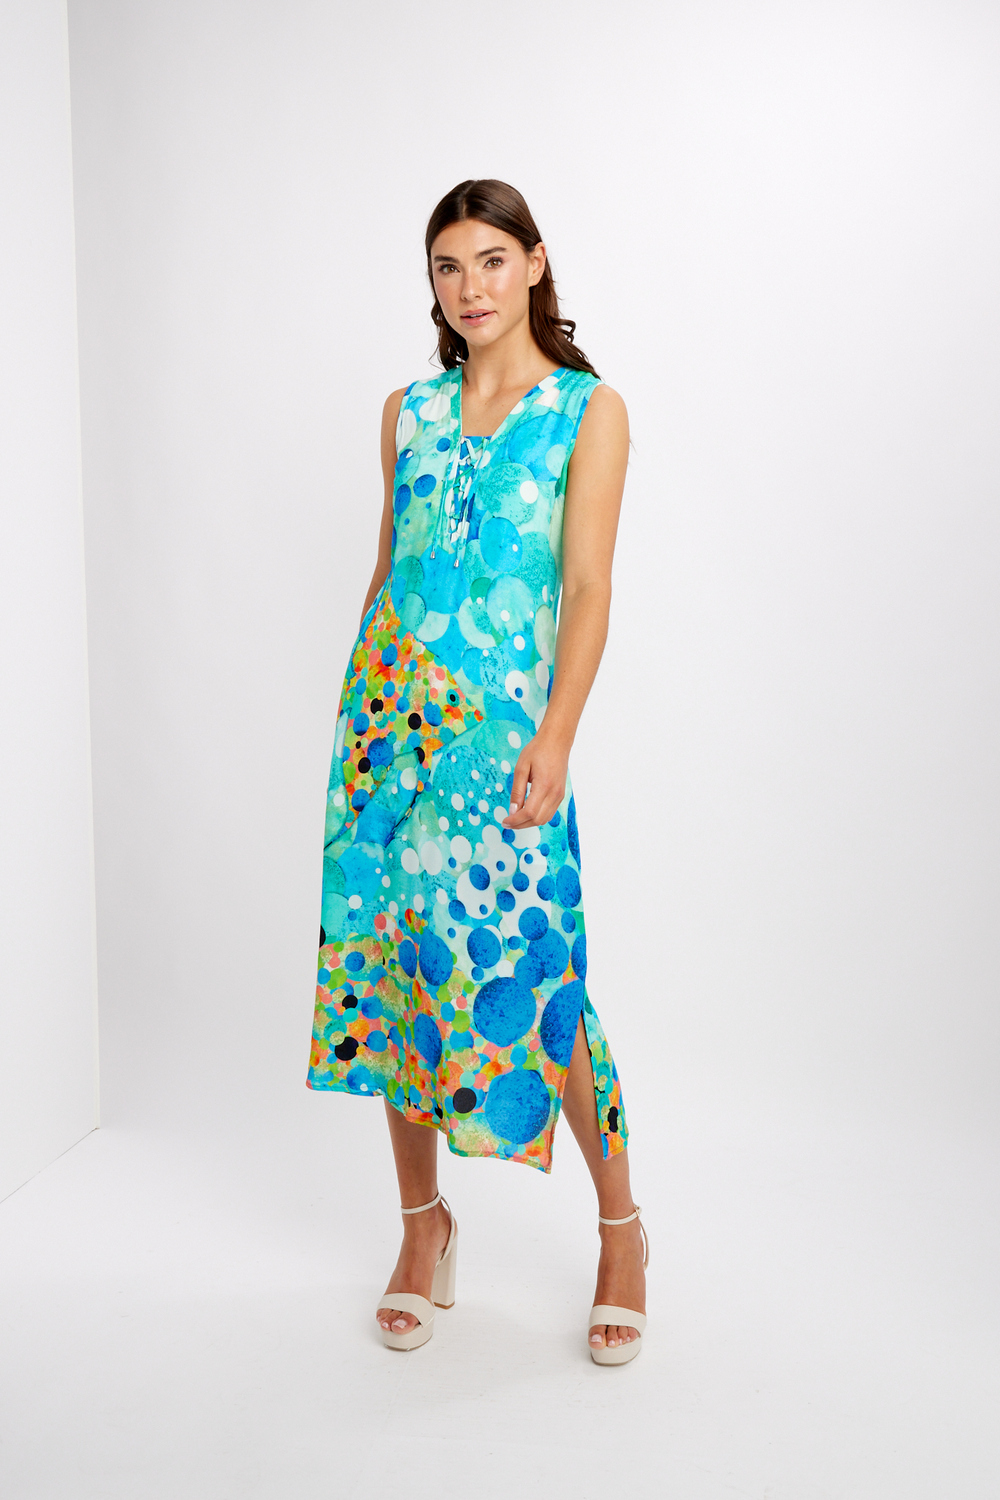 Sleeveless Square-Neck Midi Dress Style 24623. As Sample